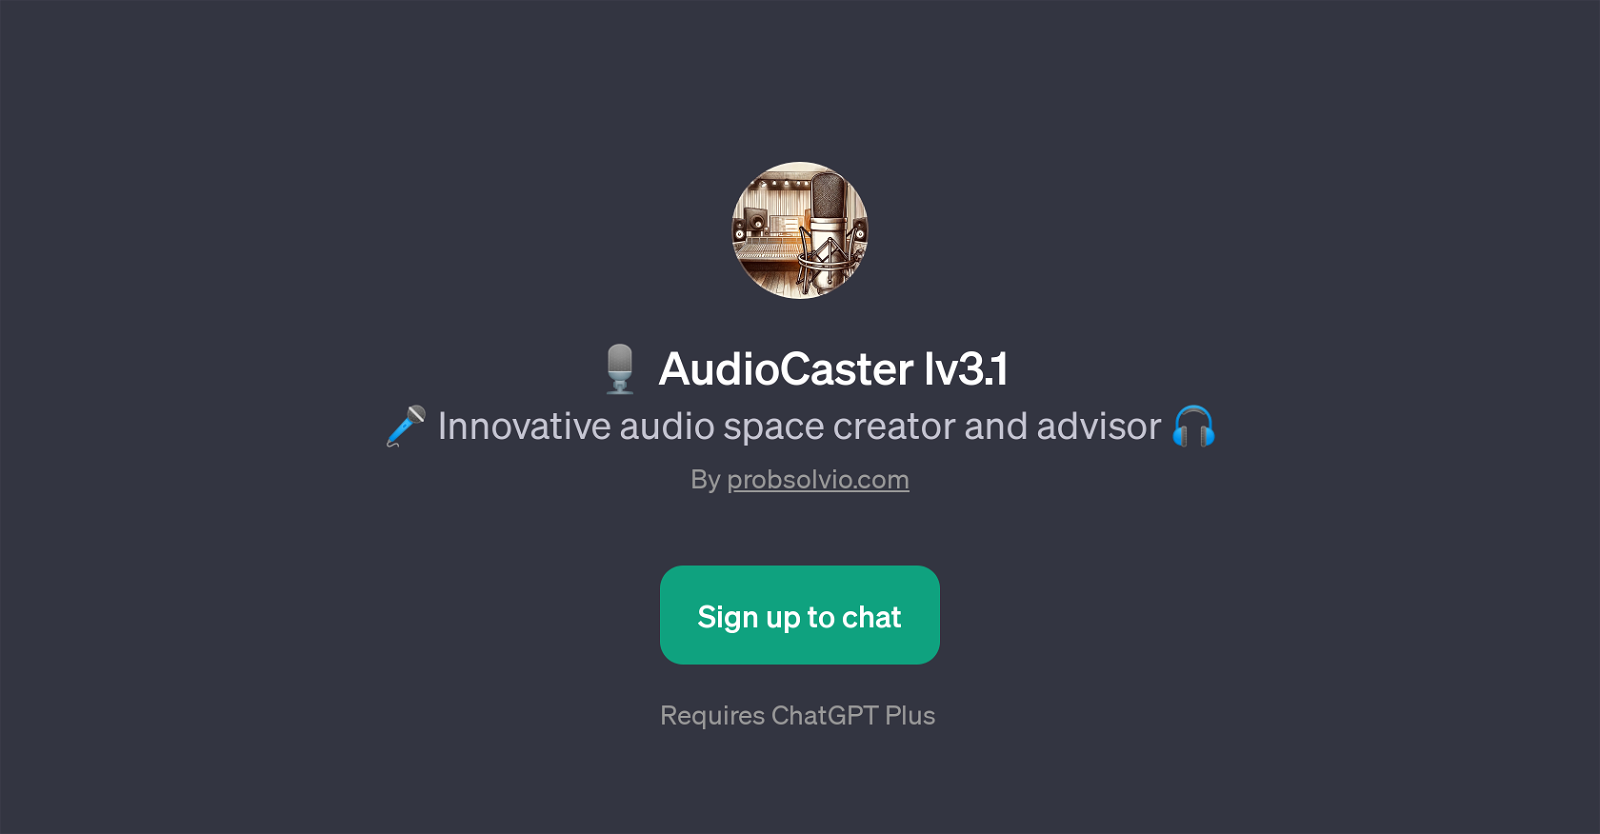 AudioCaster lv3.1 website